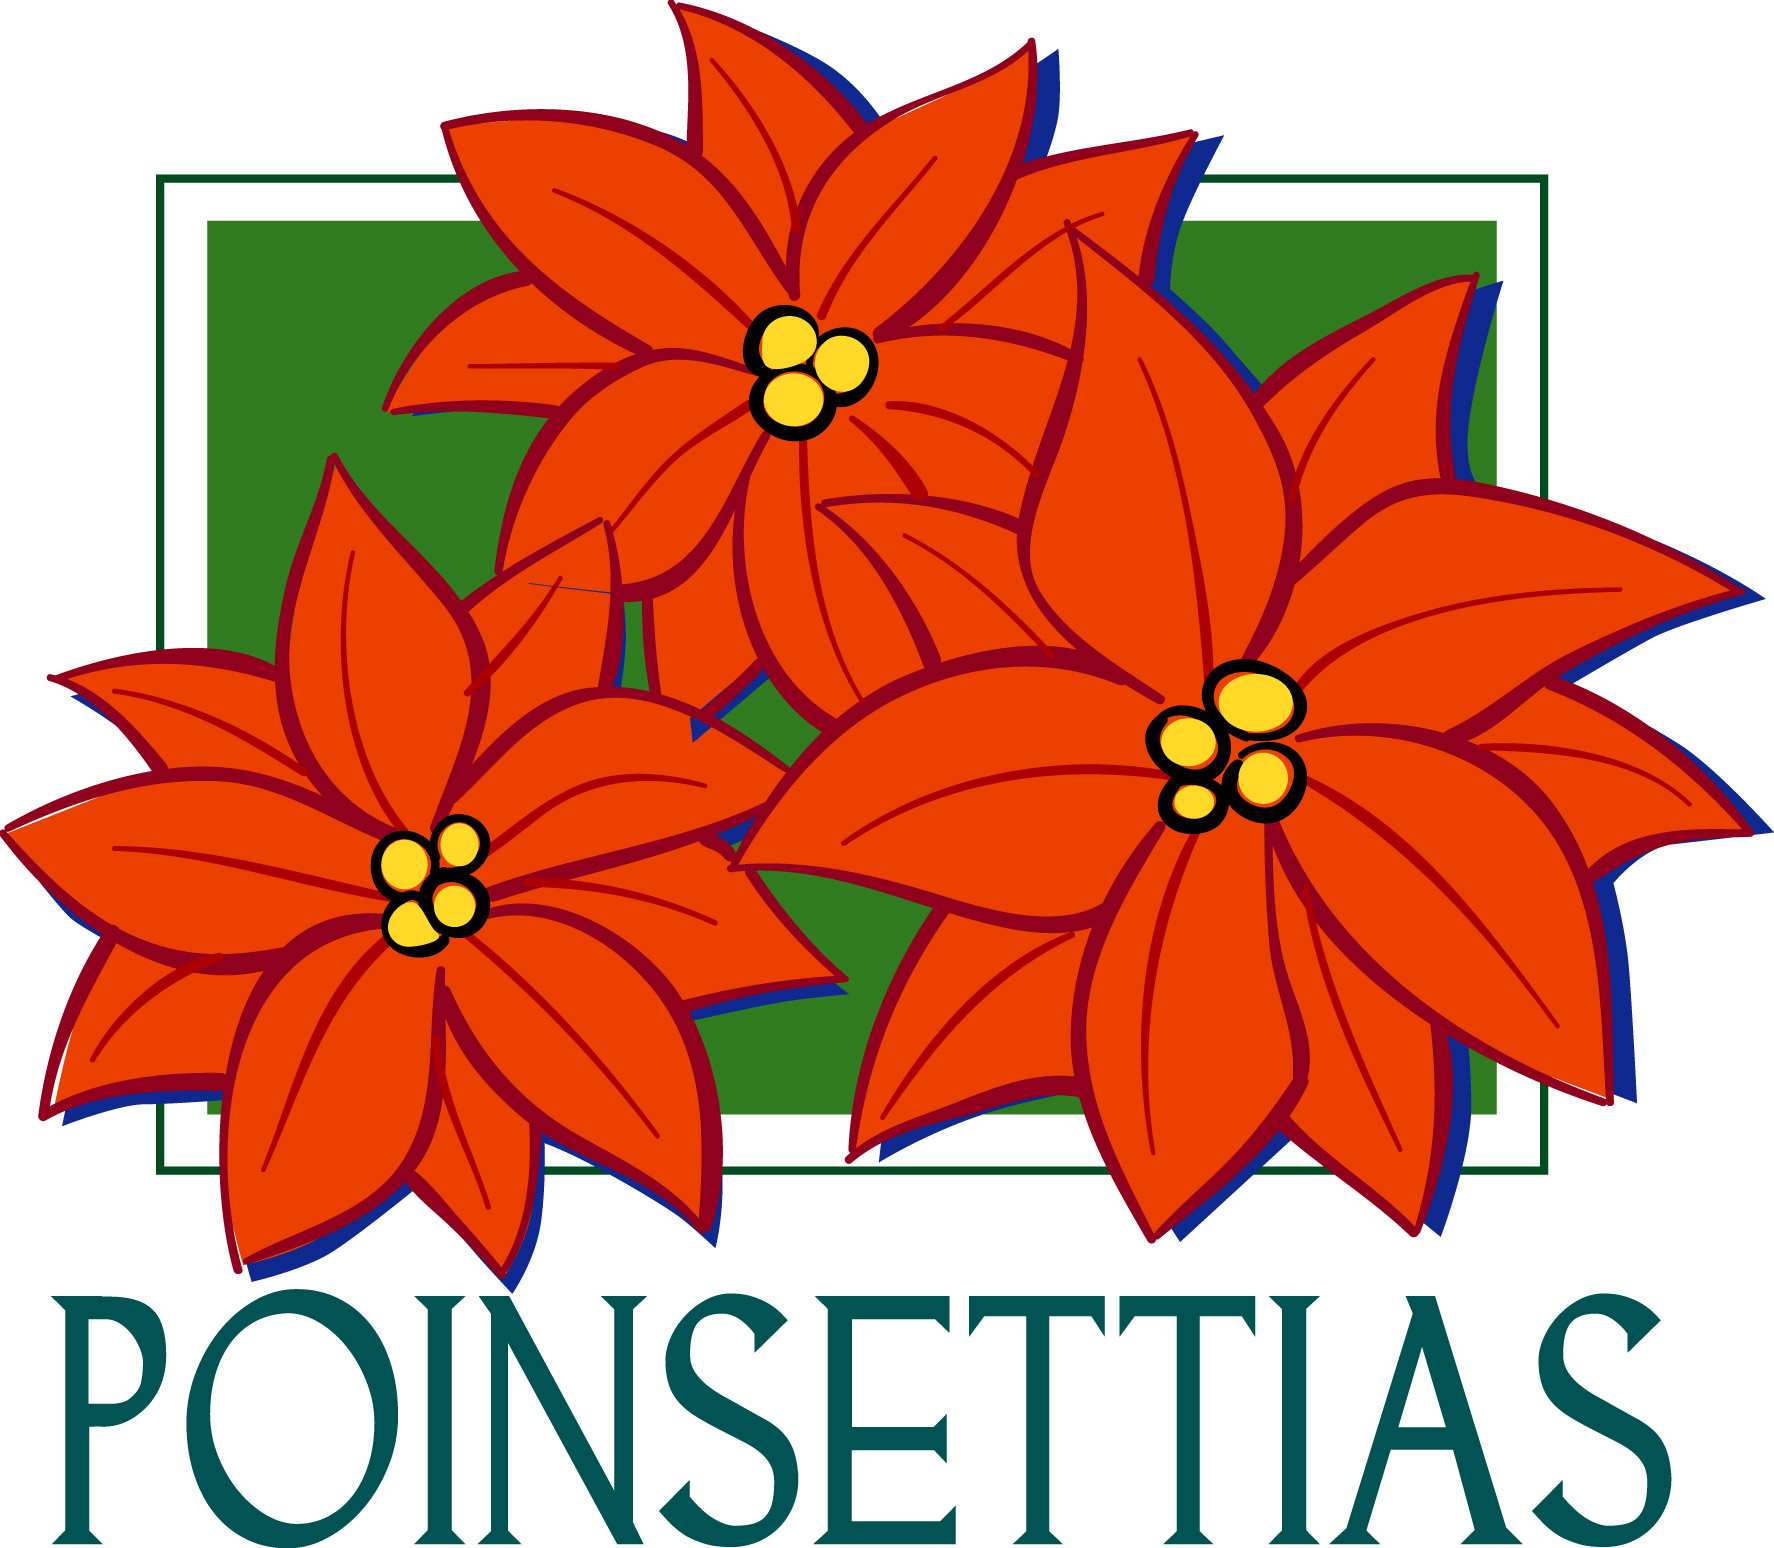 Poinsettia plant clipart